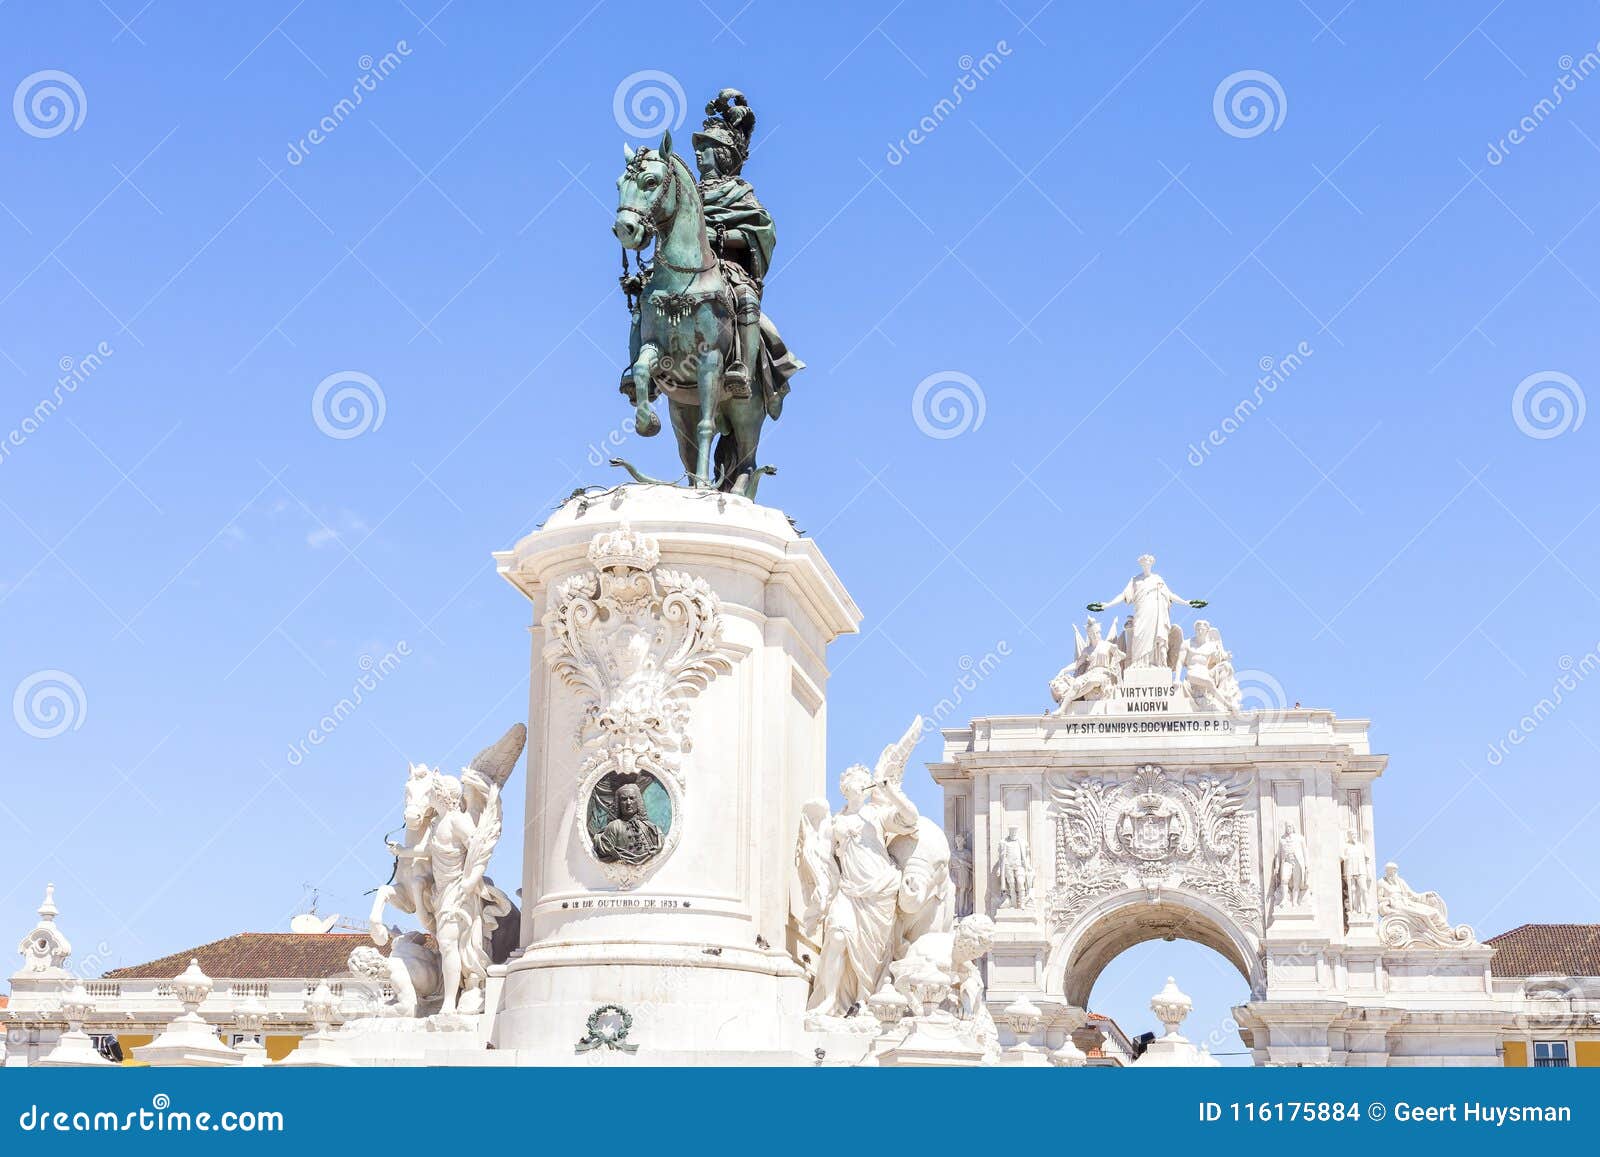 lisbon, portugal - july 10, 2017. statue of king jose at praca d